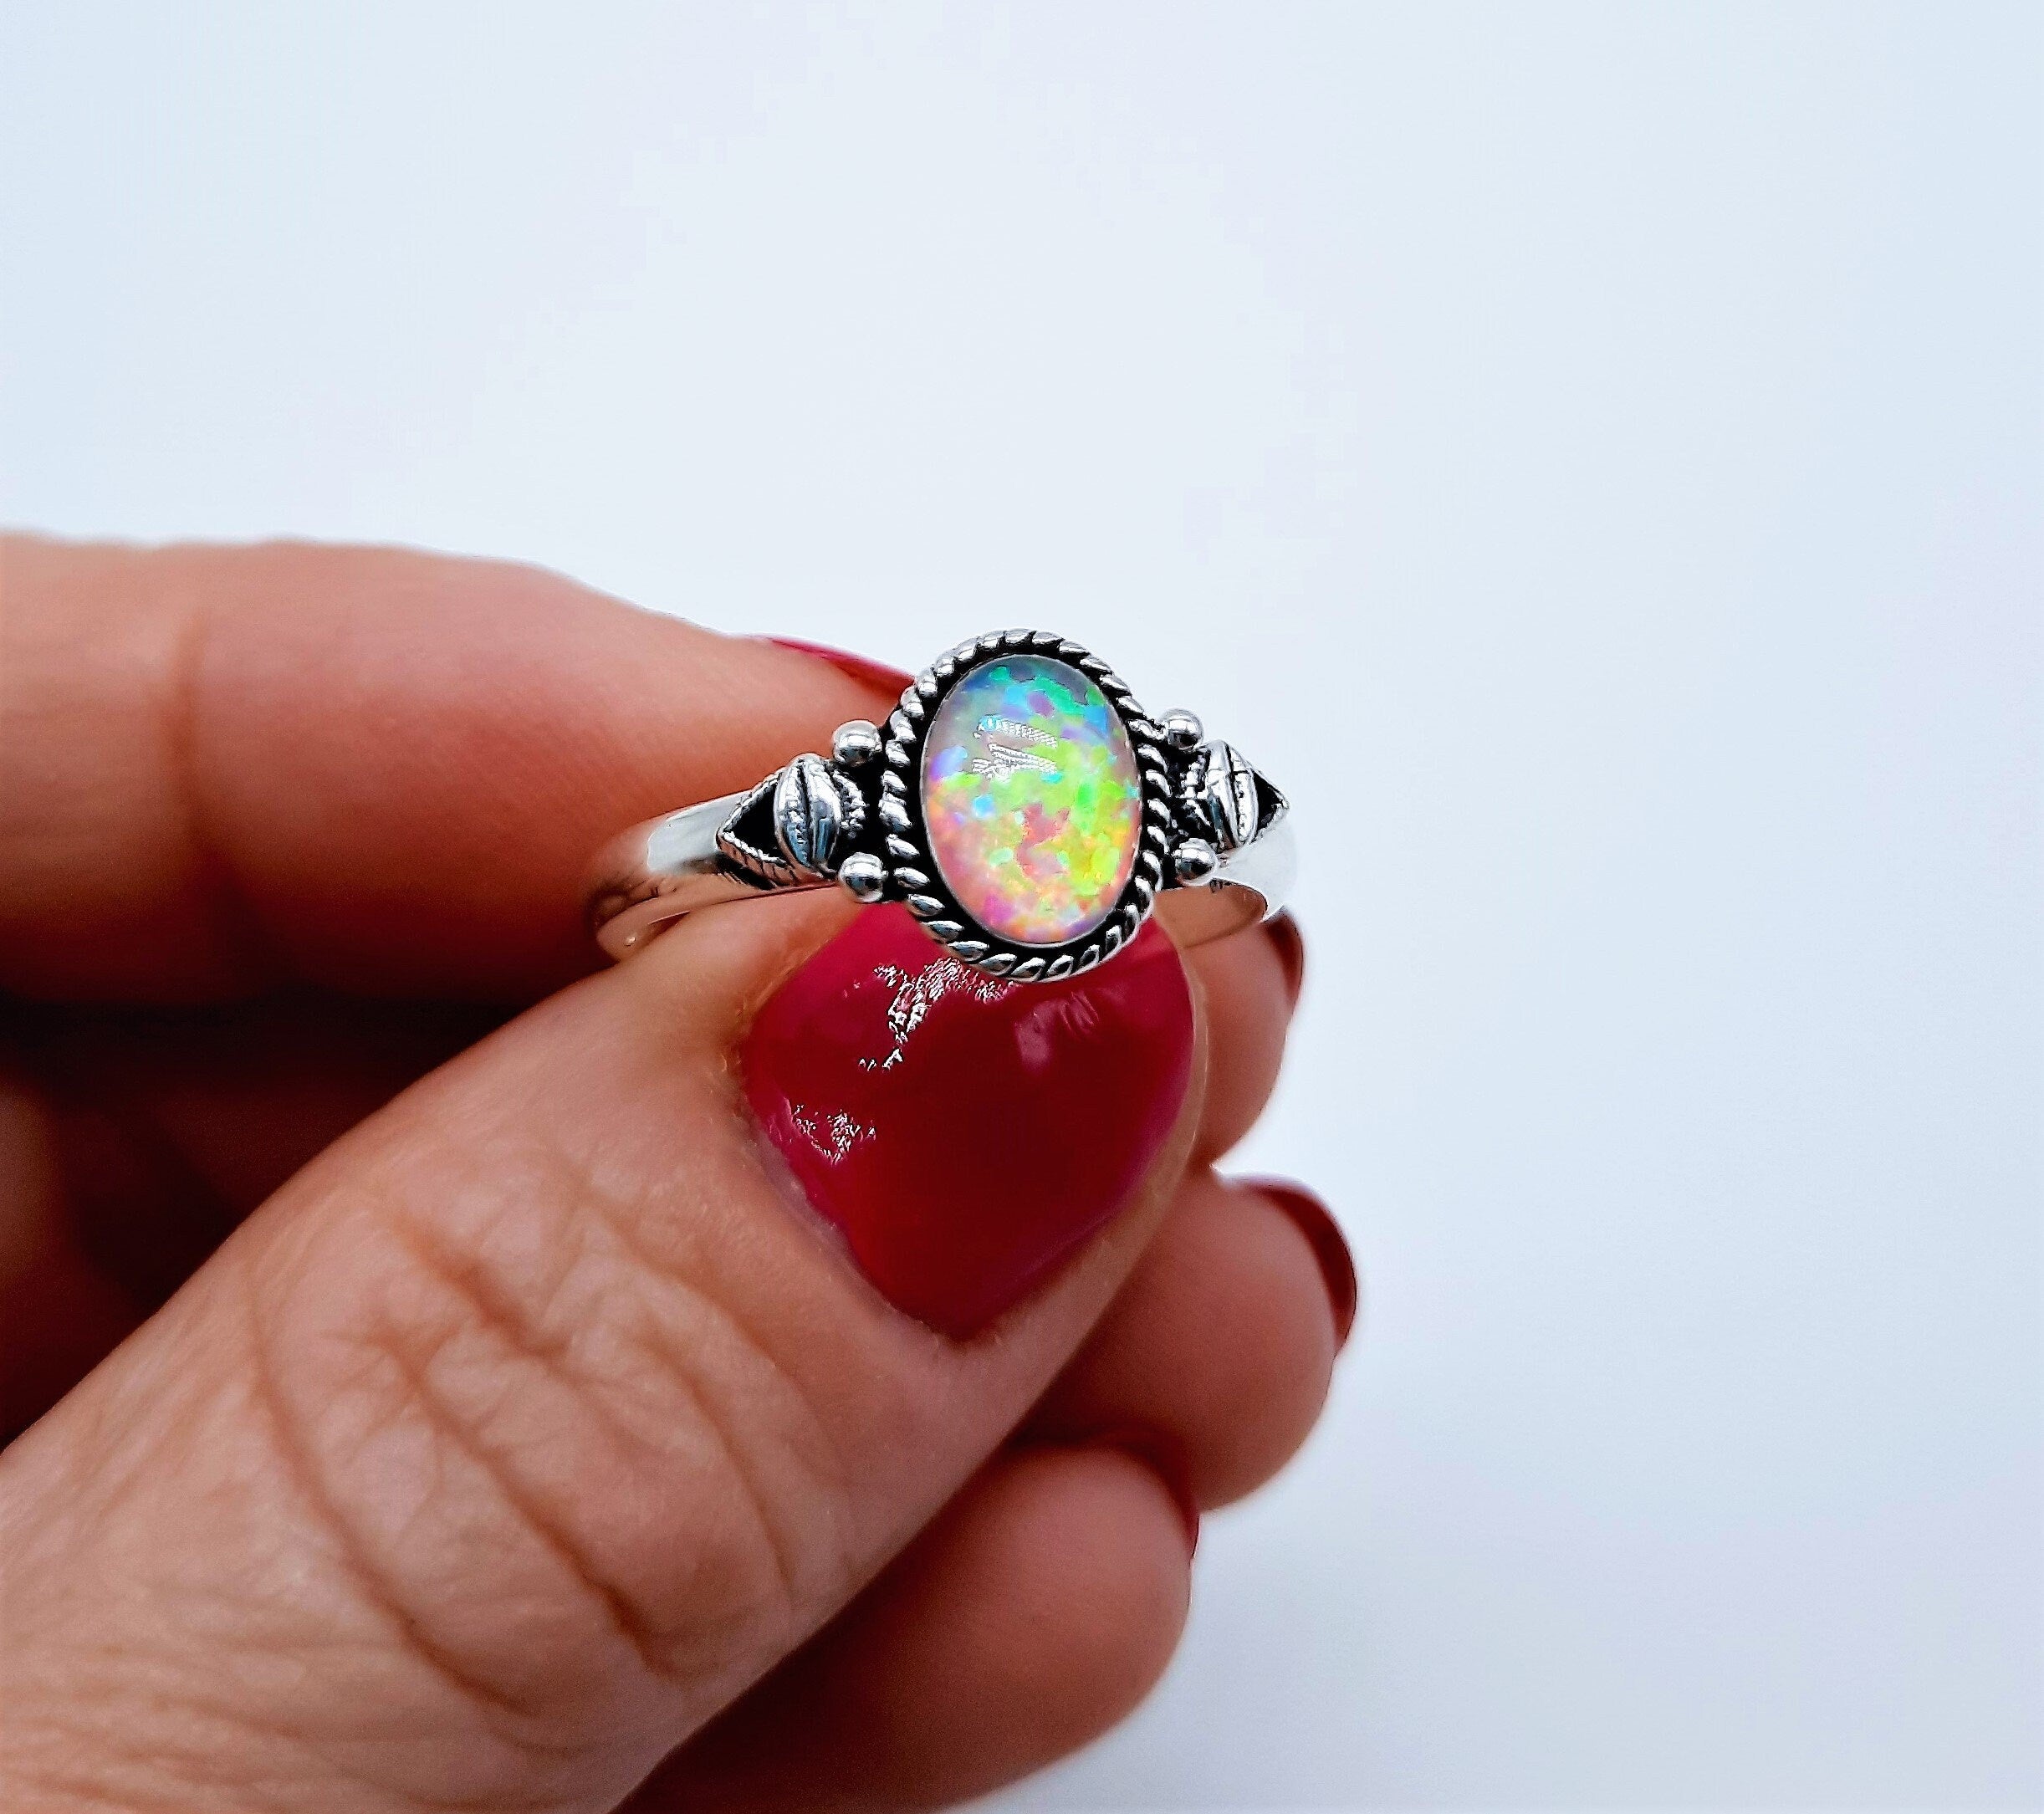 Sterling Silver Fire Shape Blue Lab Opal Ring